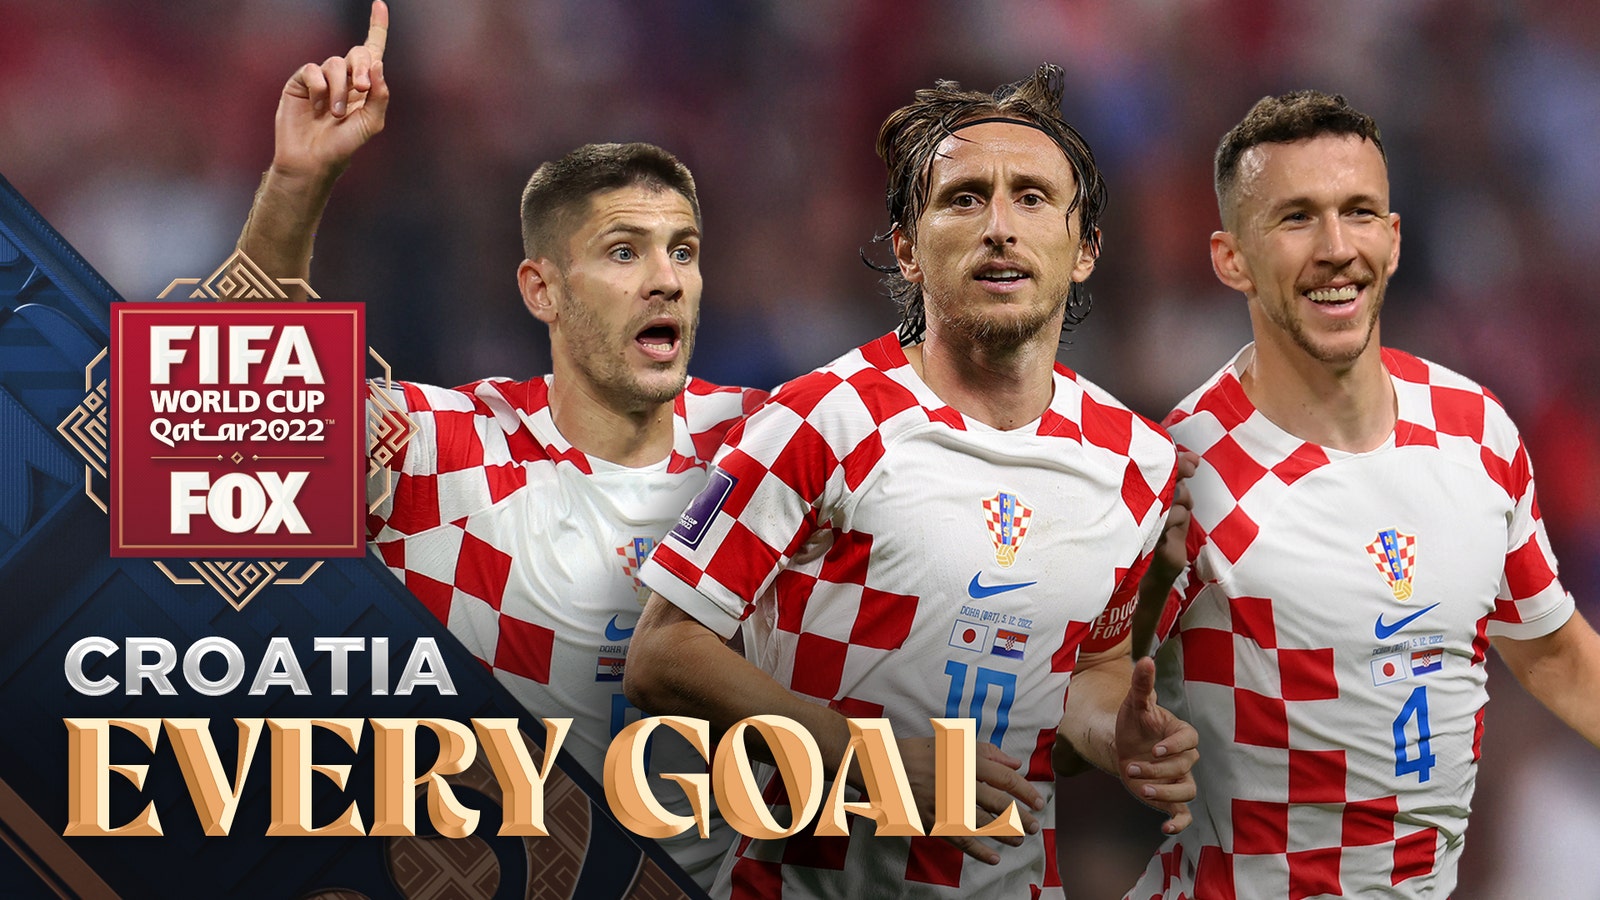 Every goal by Croatia